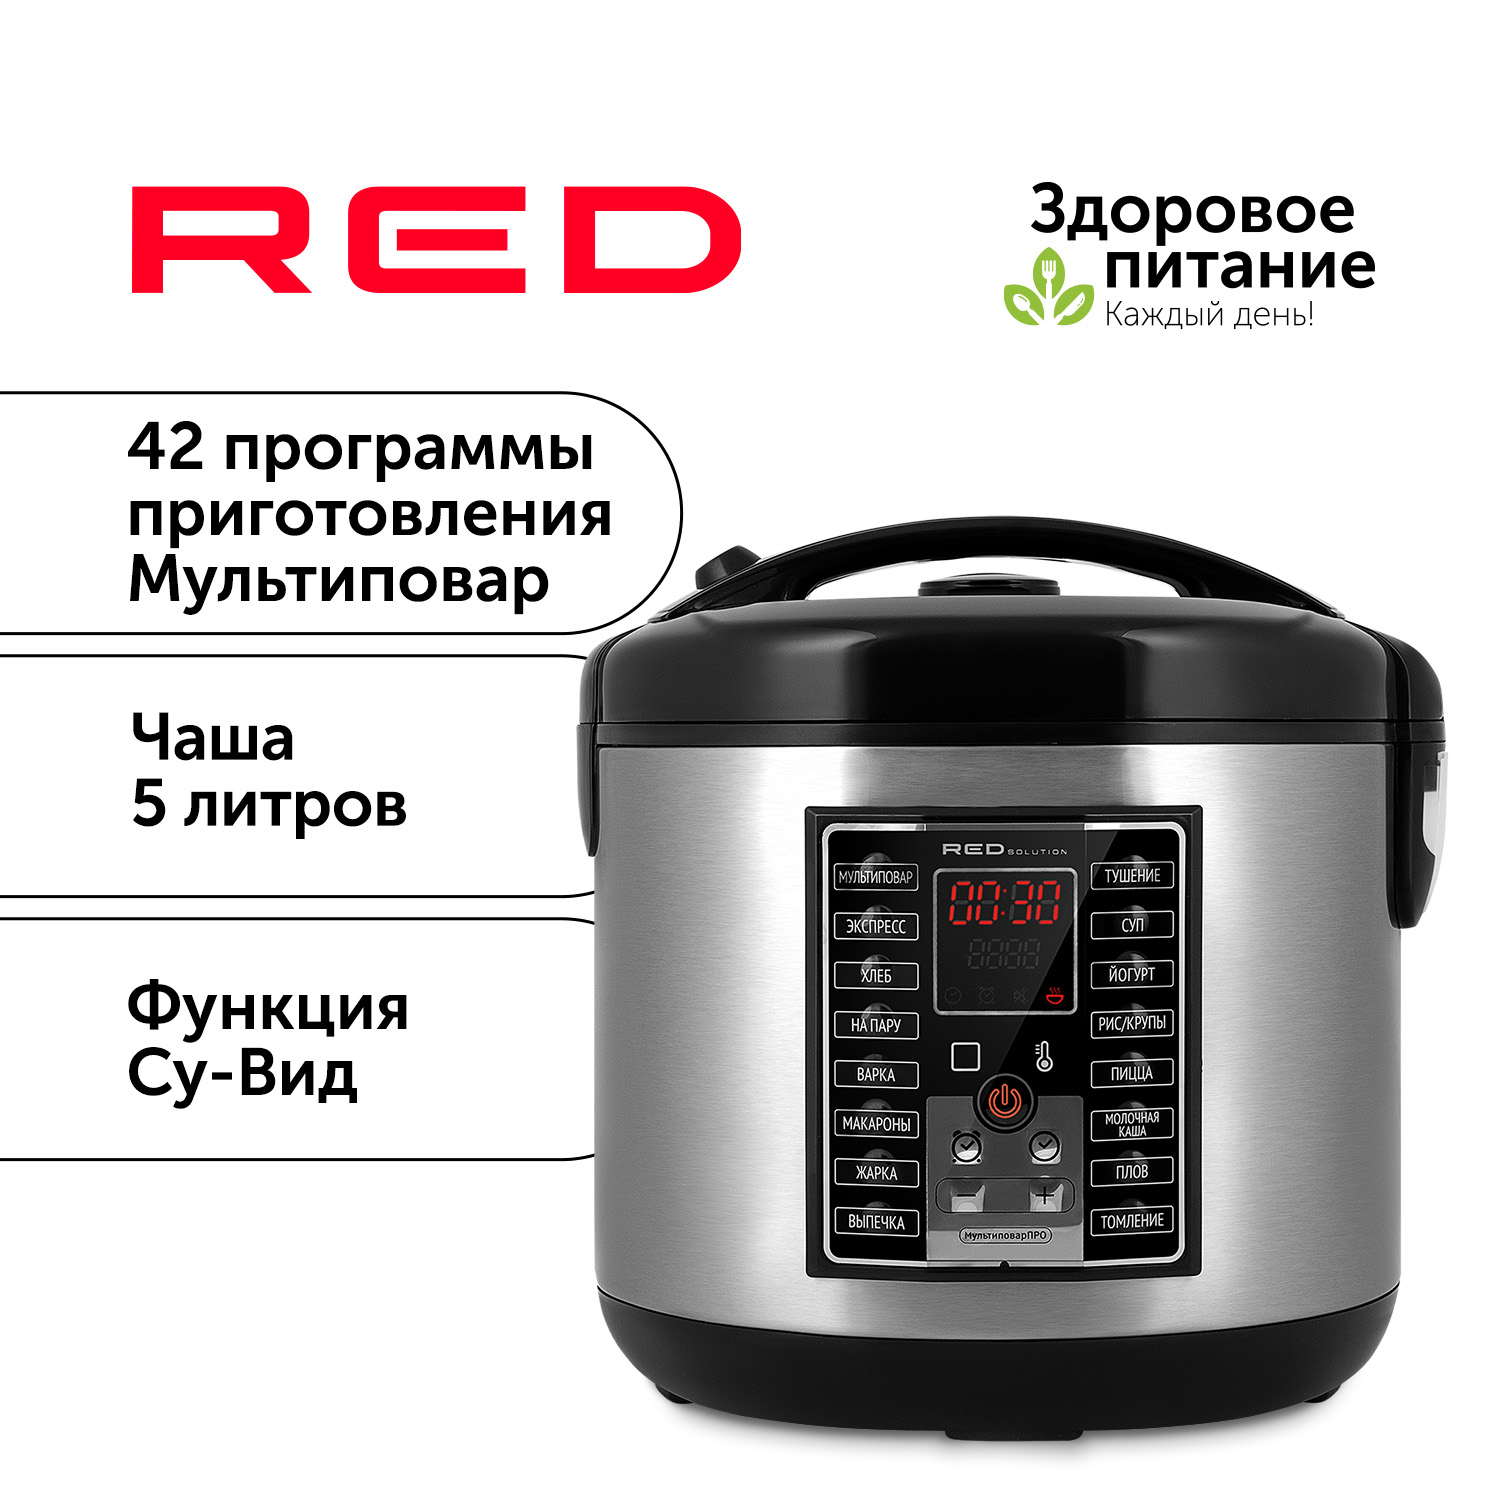 Мультиварка RED SOLUTION RMC-M25 серебристый, черный мультиварка red solution rmc m252 серая